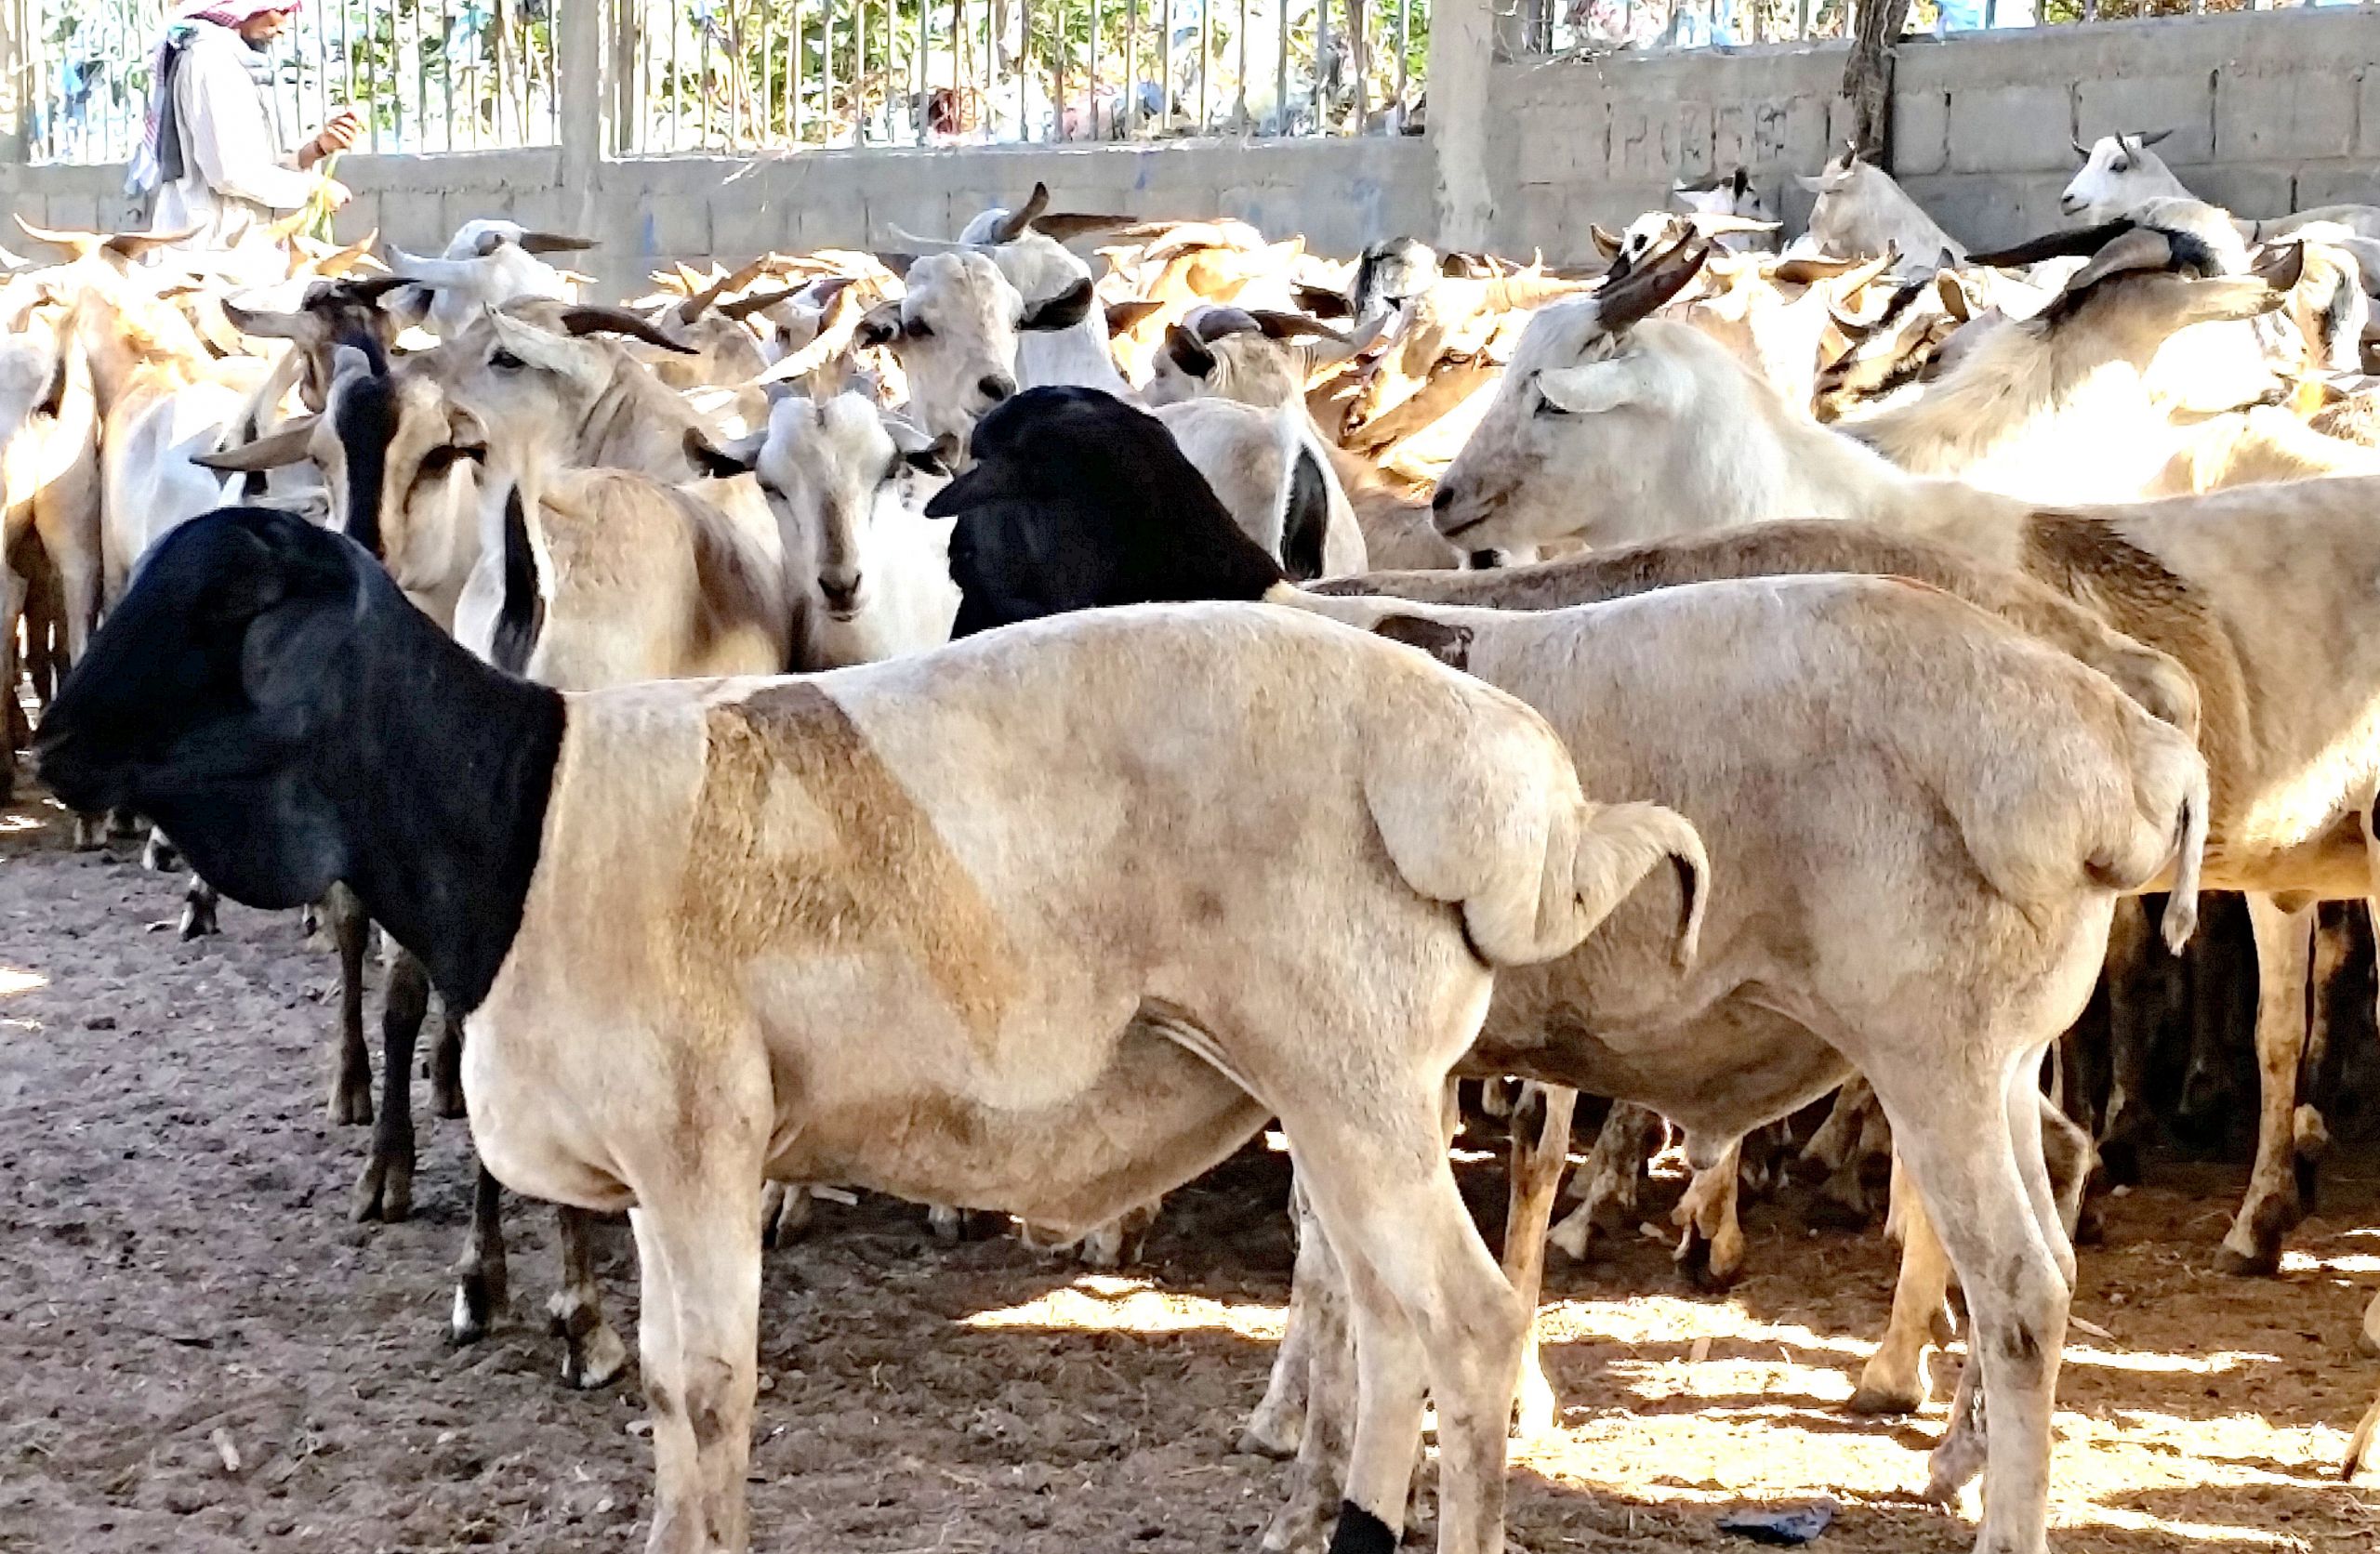 somalia hargeisalivestockmarket fat tailedsheepforexport cropped